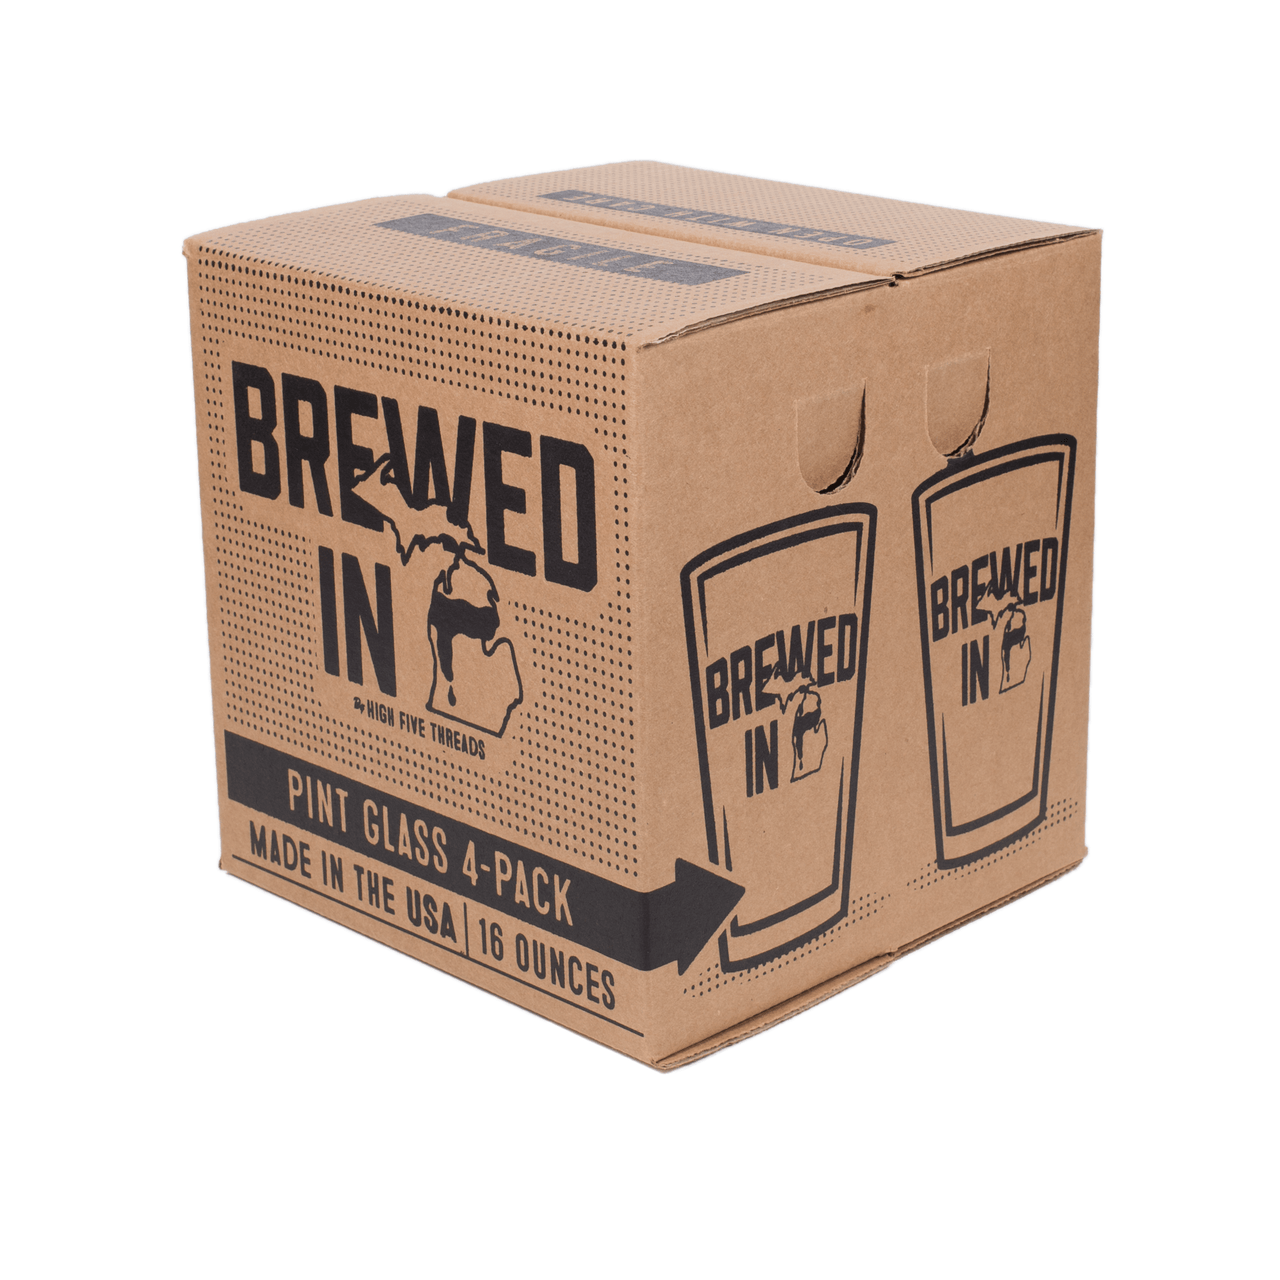 Brewed in Michigan 4-Pack